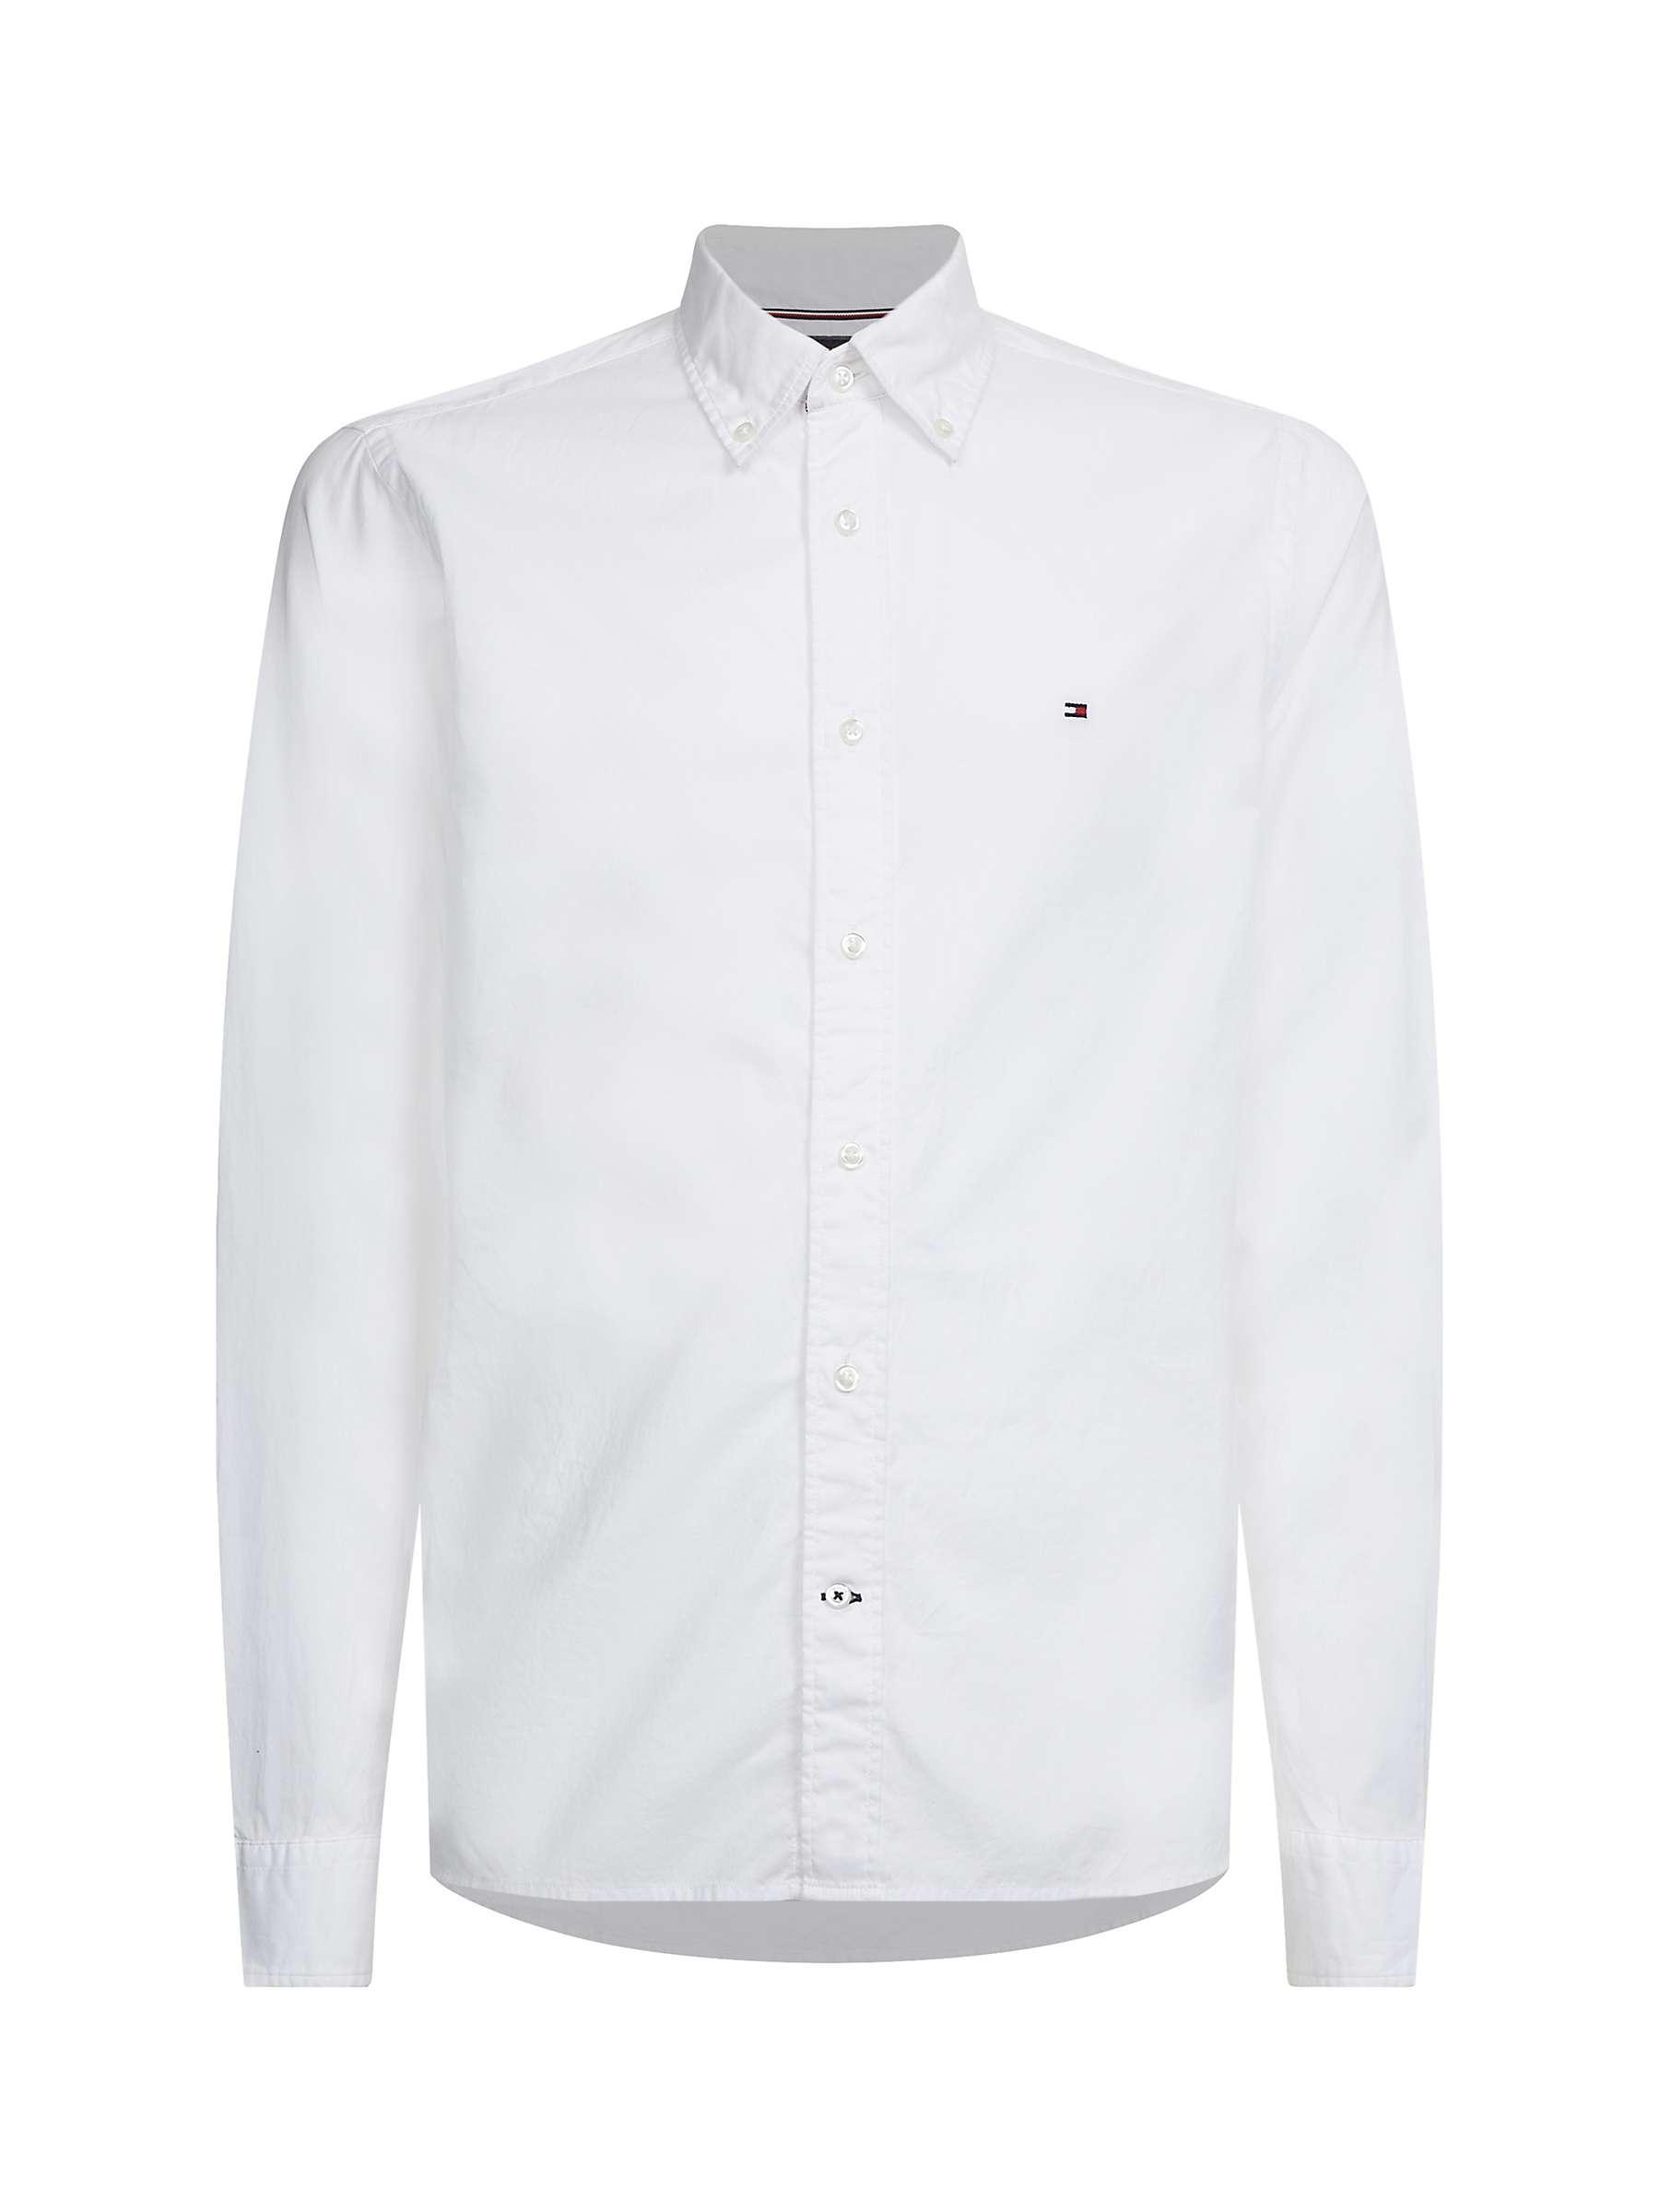 Buy Tommy Hilfiger Poplin Shirt, White Online at johnlewis.com